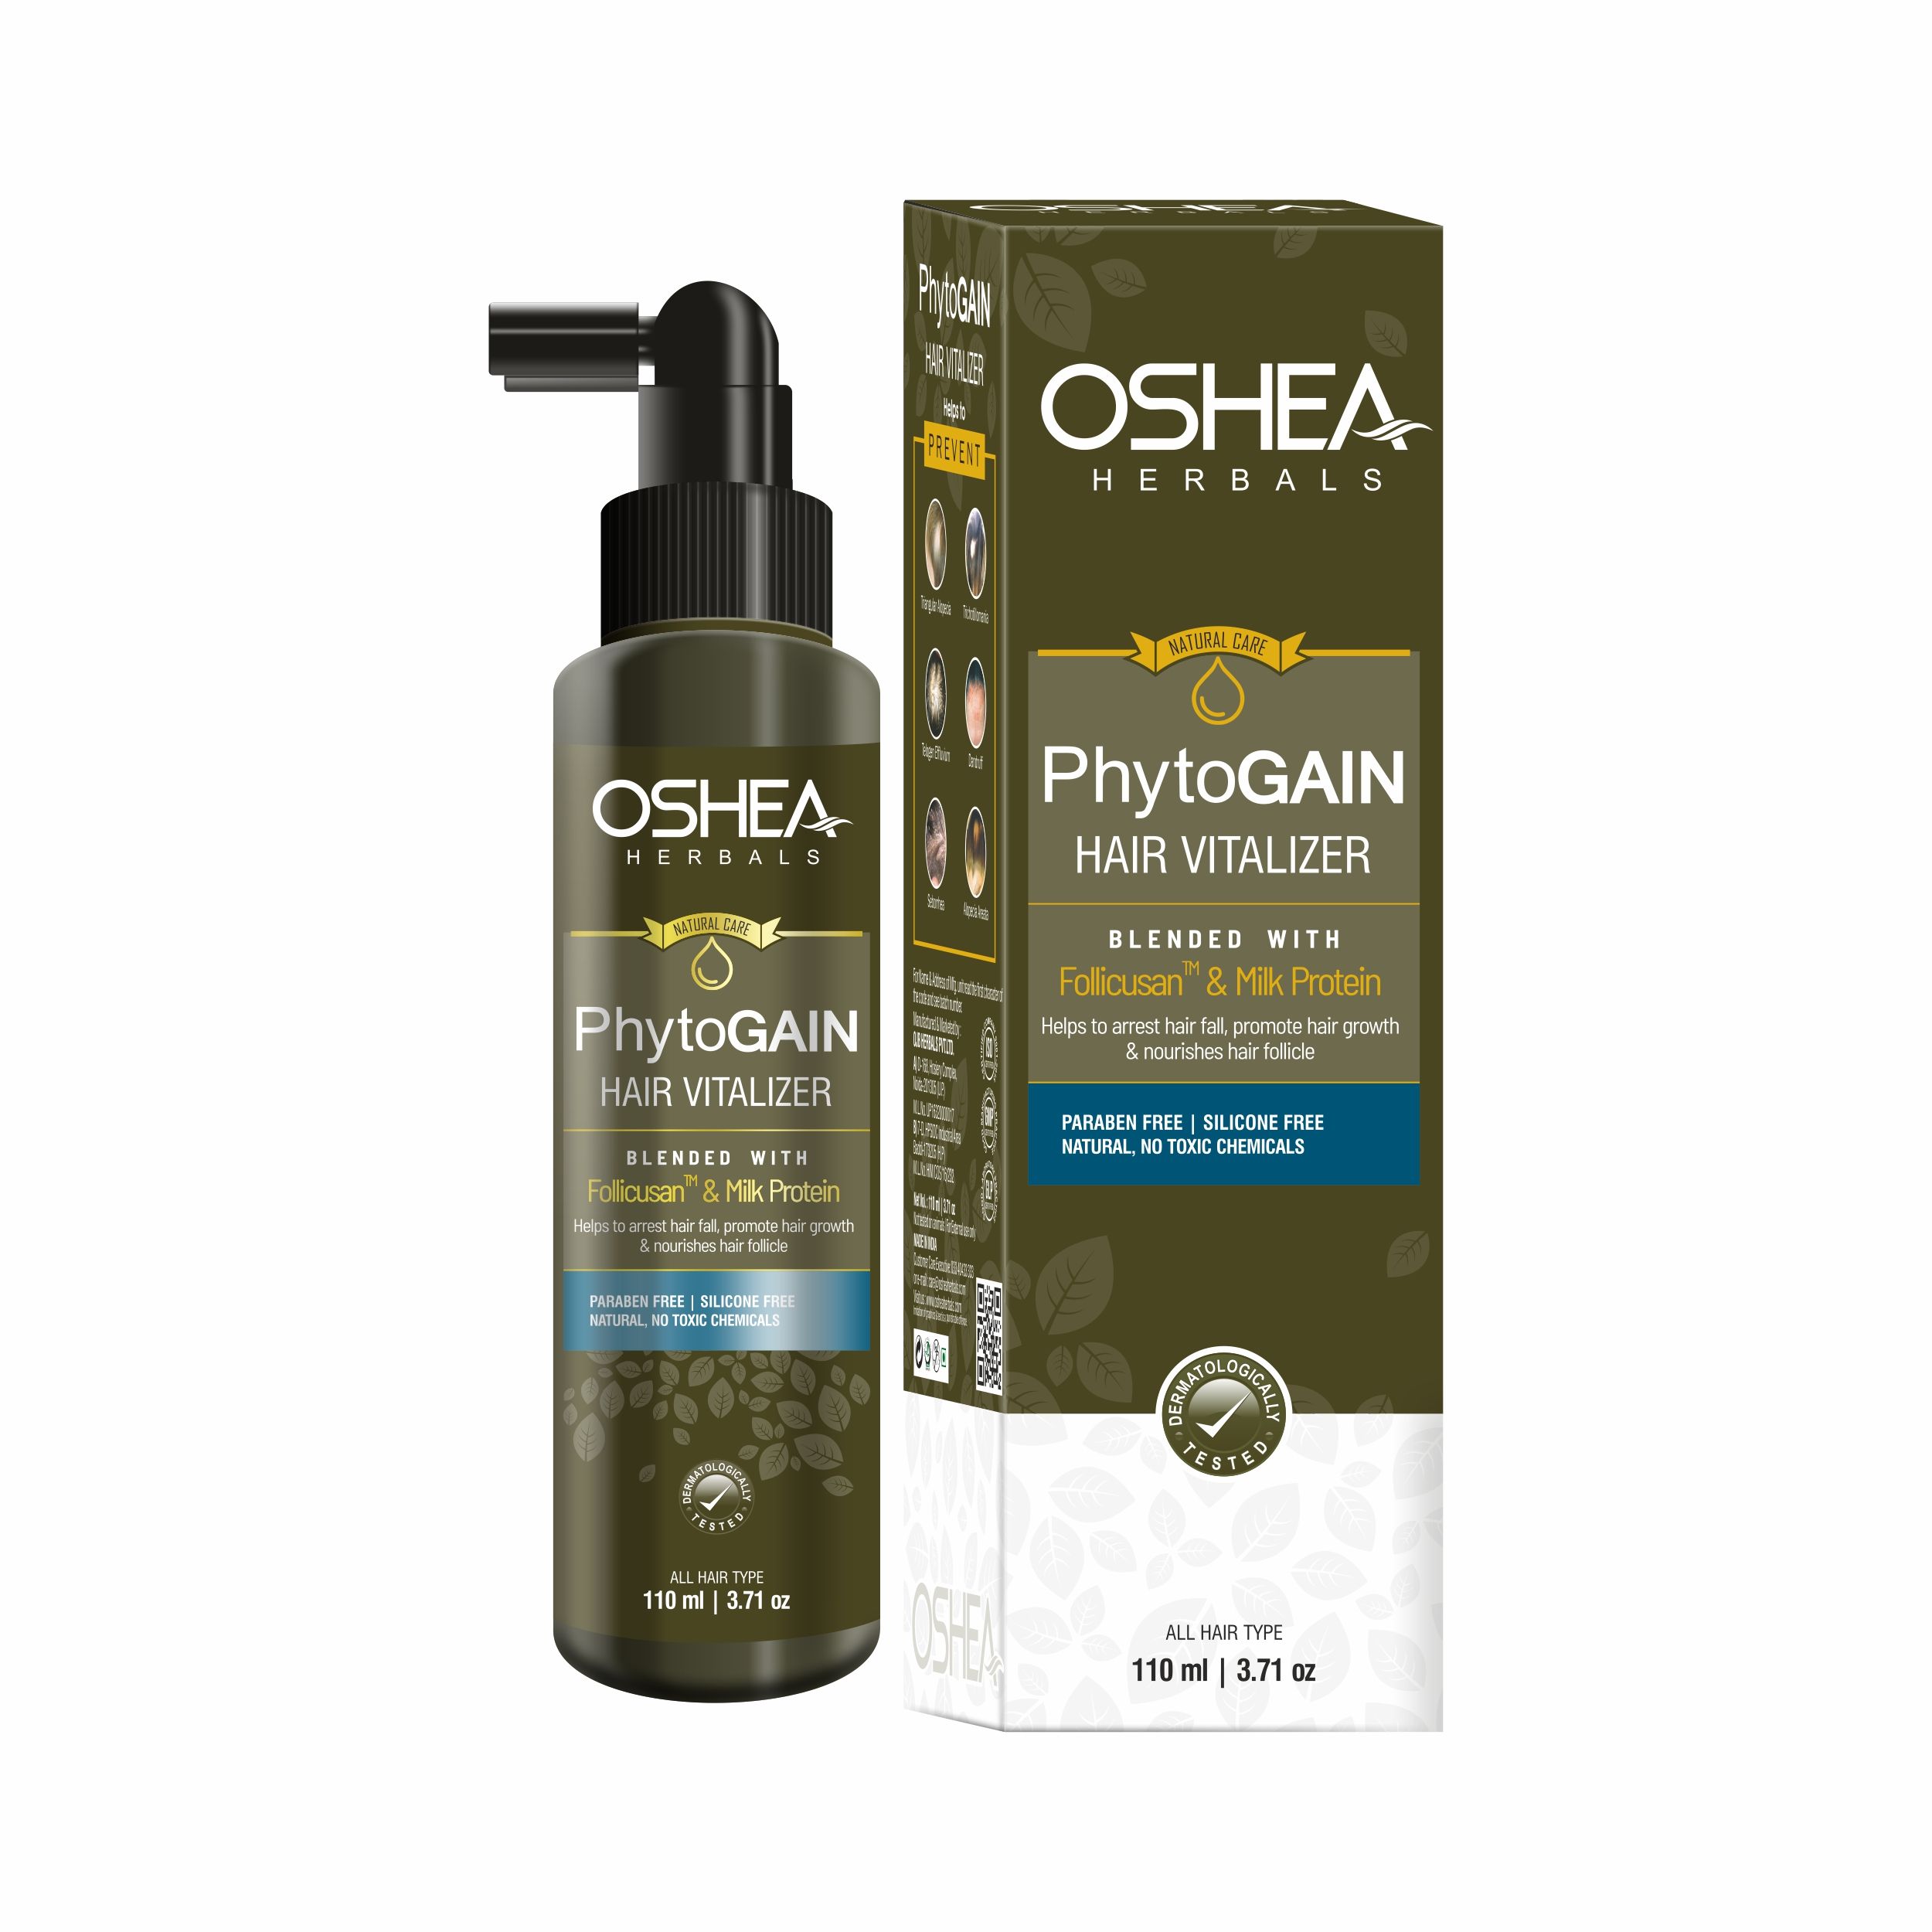 Oshea Herbals Phytogain Hair Vitalizer